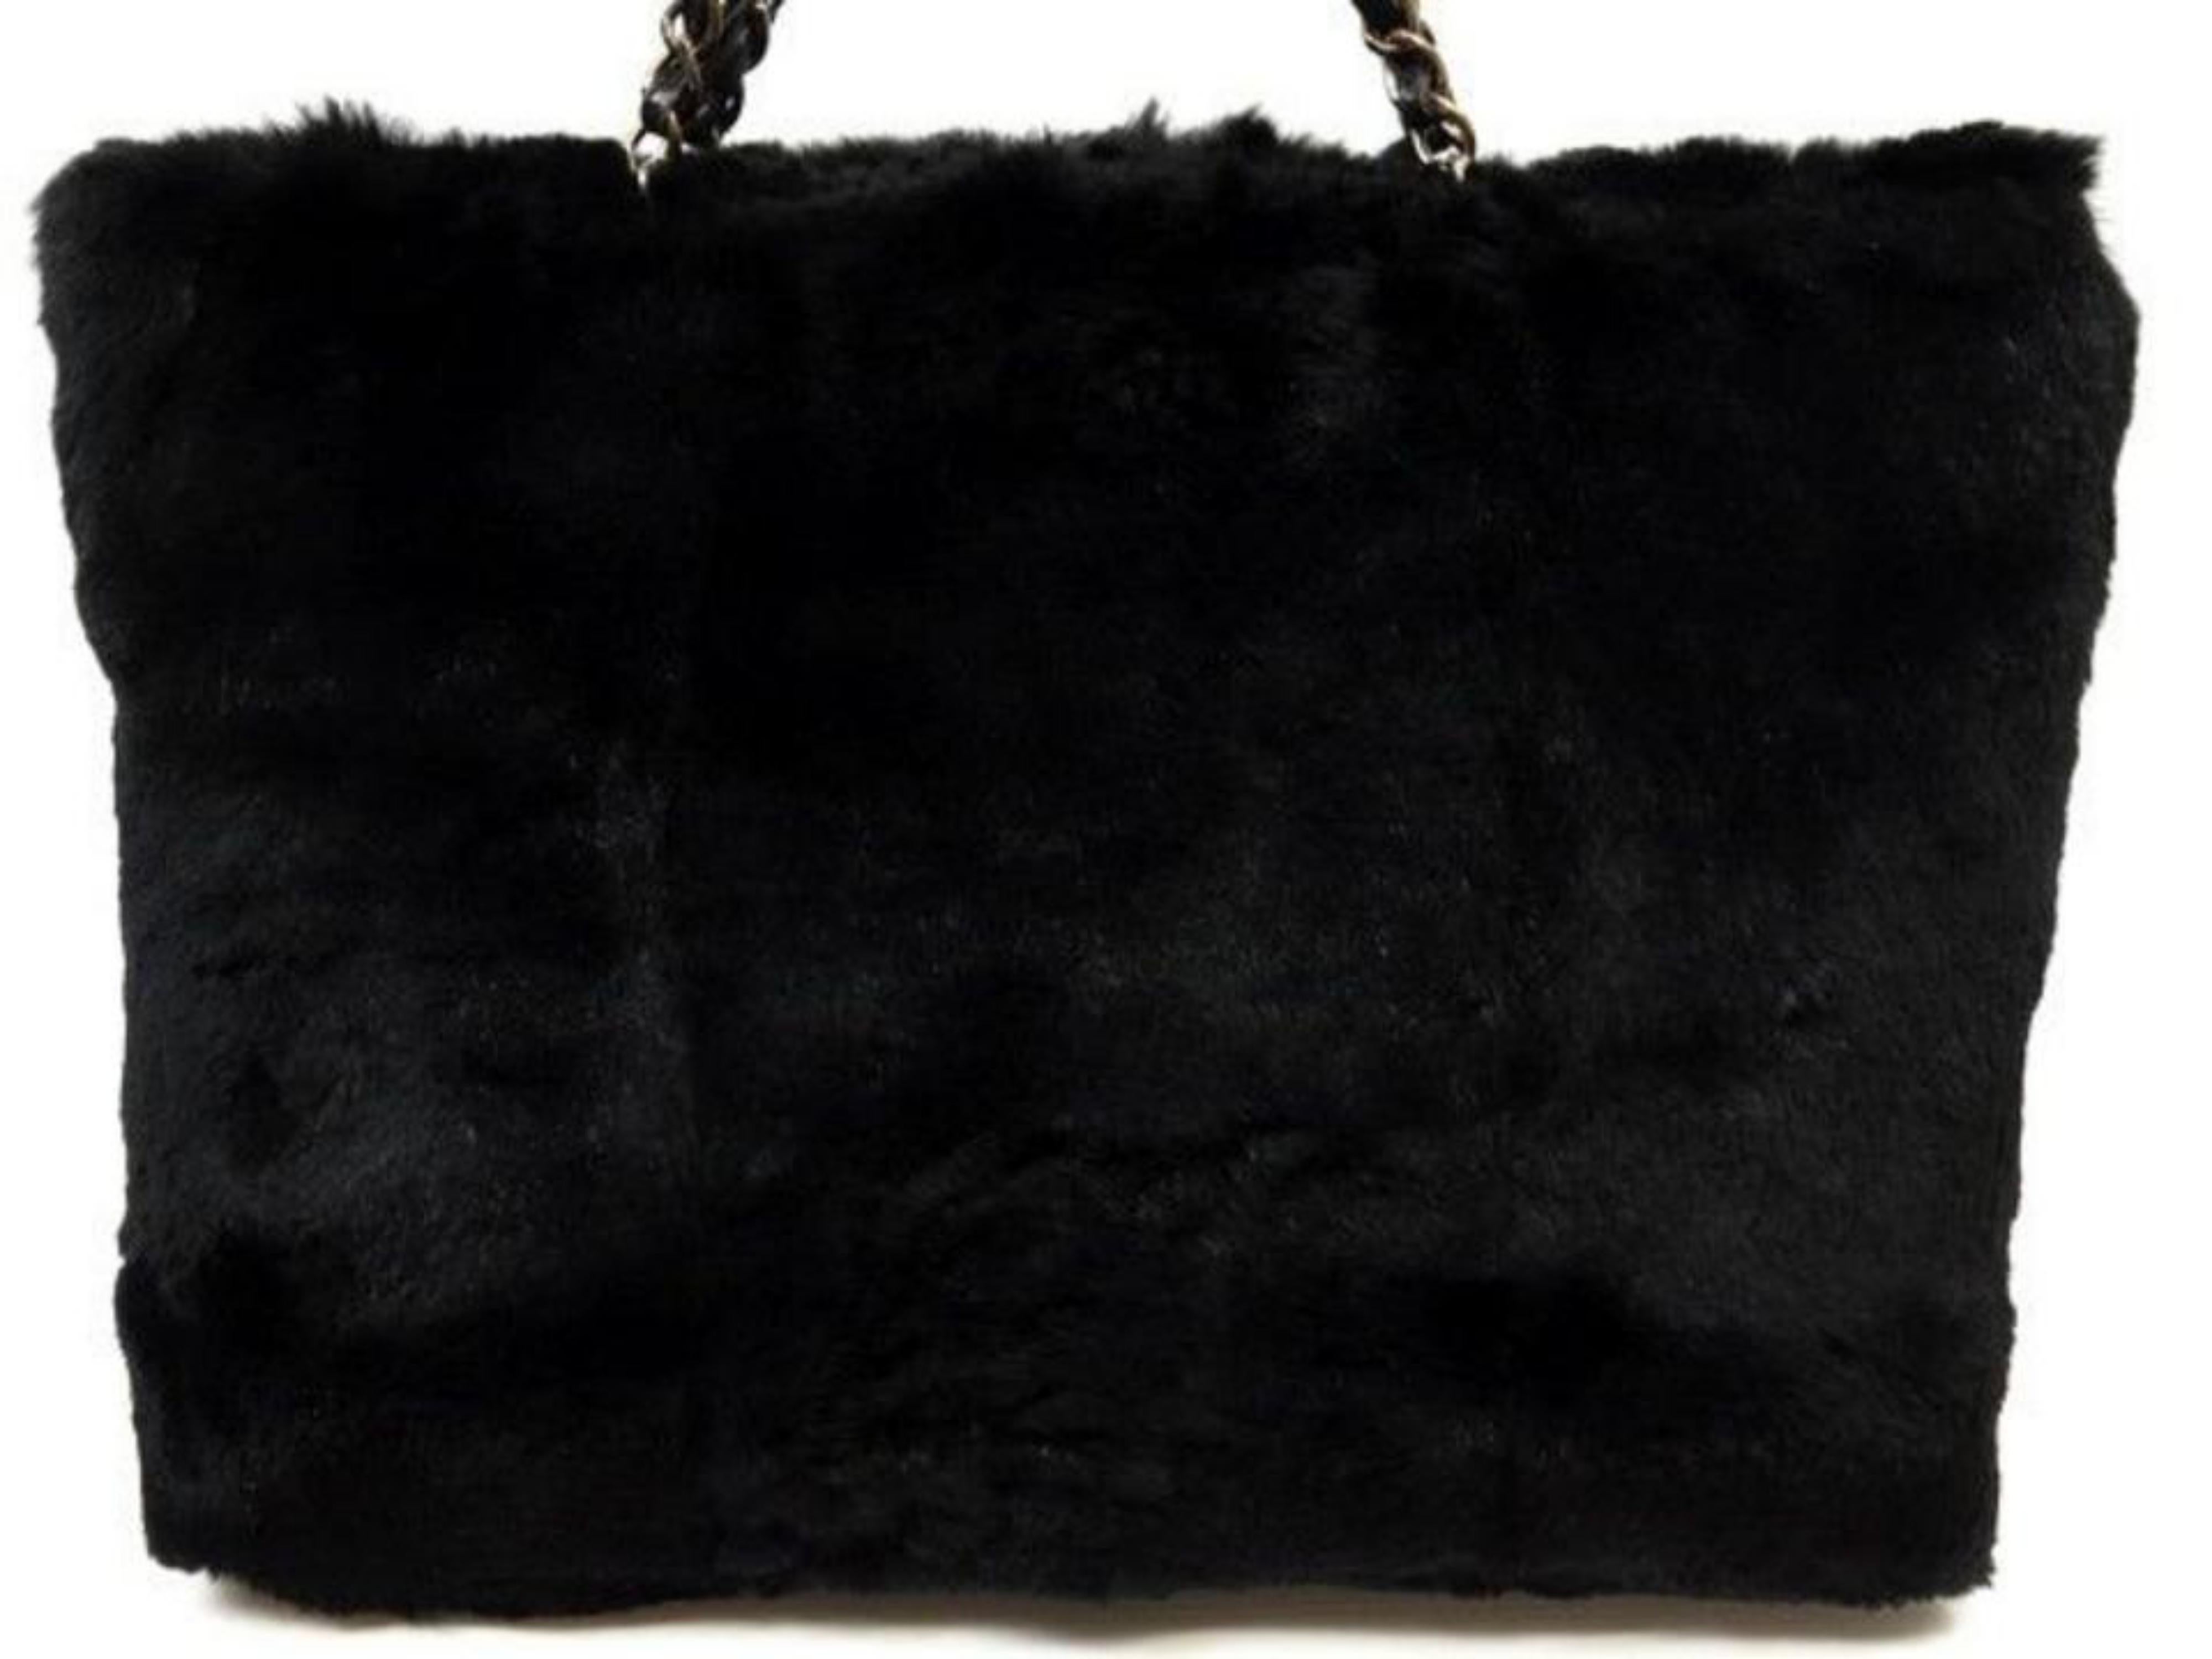 Chanel Cc Chain Tote 227177 Black Rabbit Fur Shoulder Bag For Sale 4